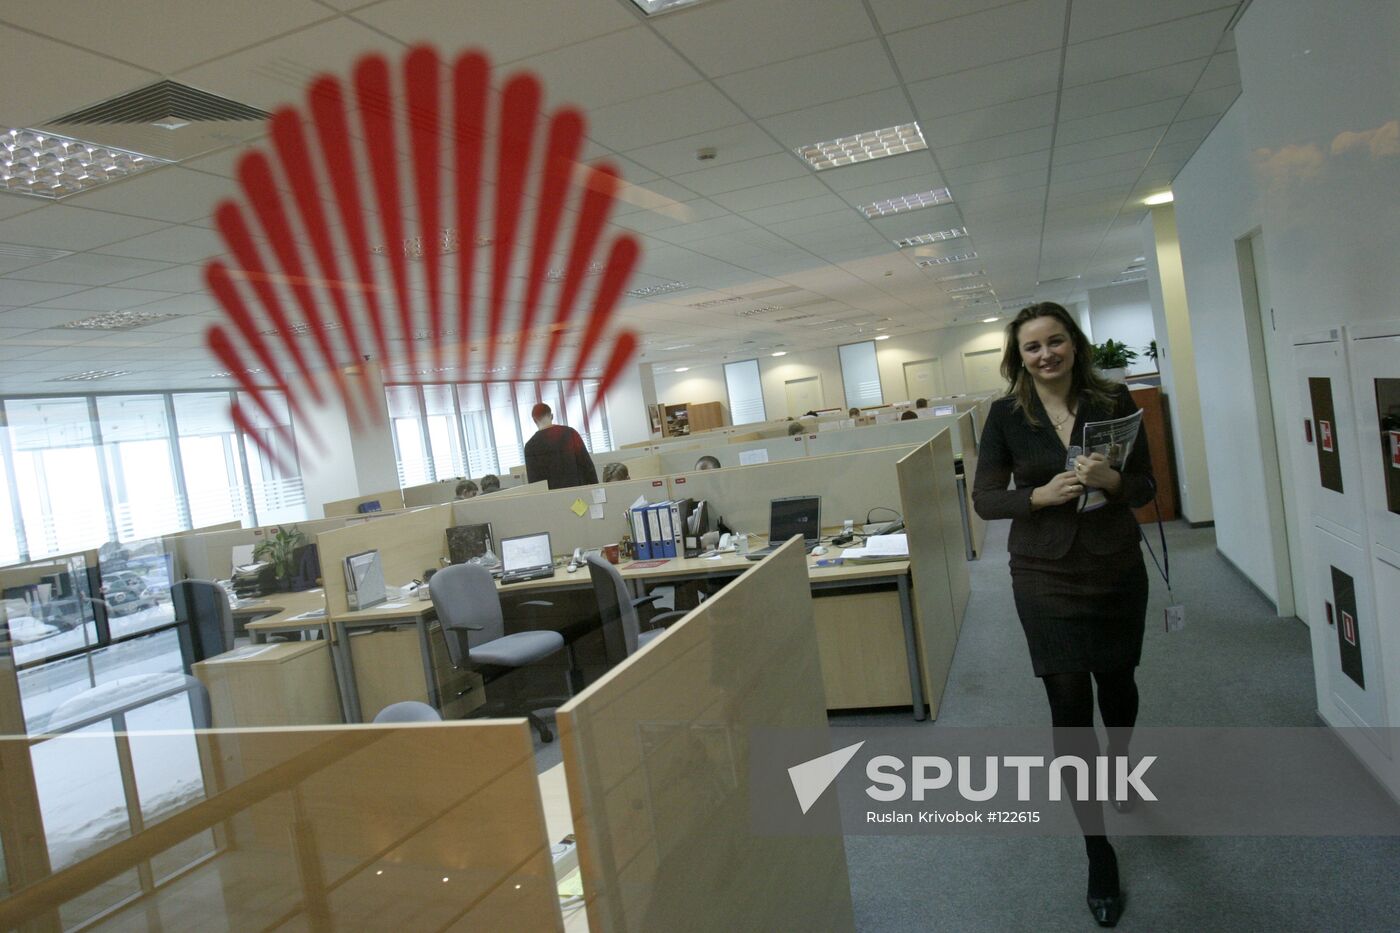 OFFICE HUAWEI COMPANY CHINA | Sputnik Mediabank